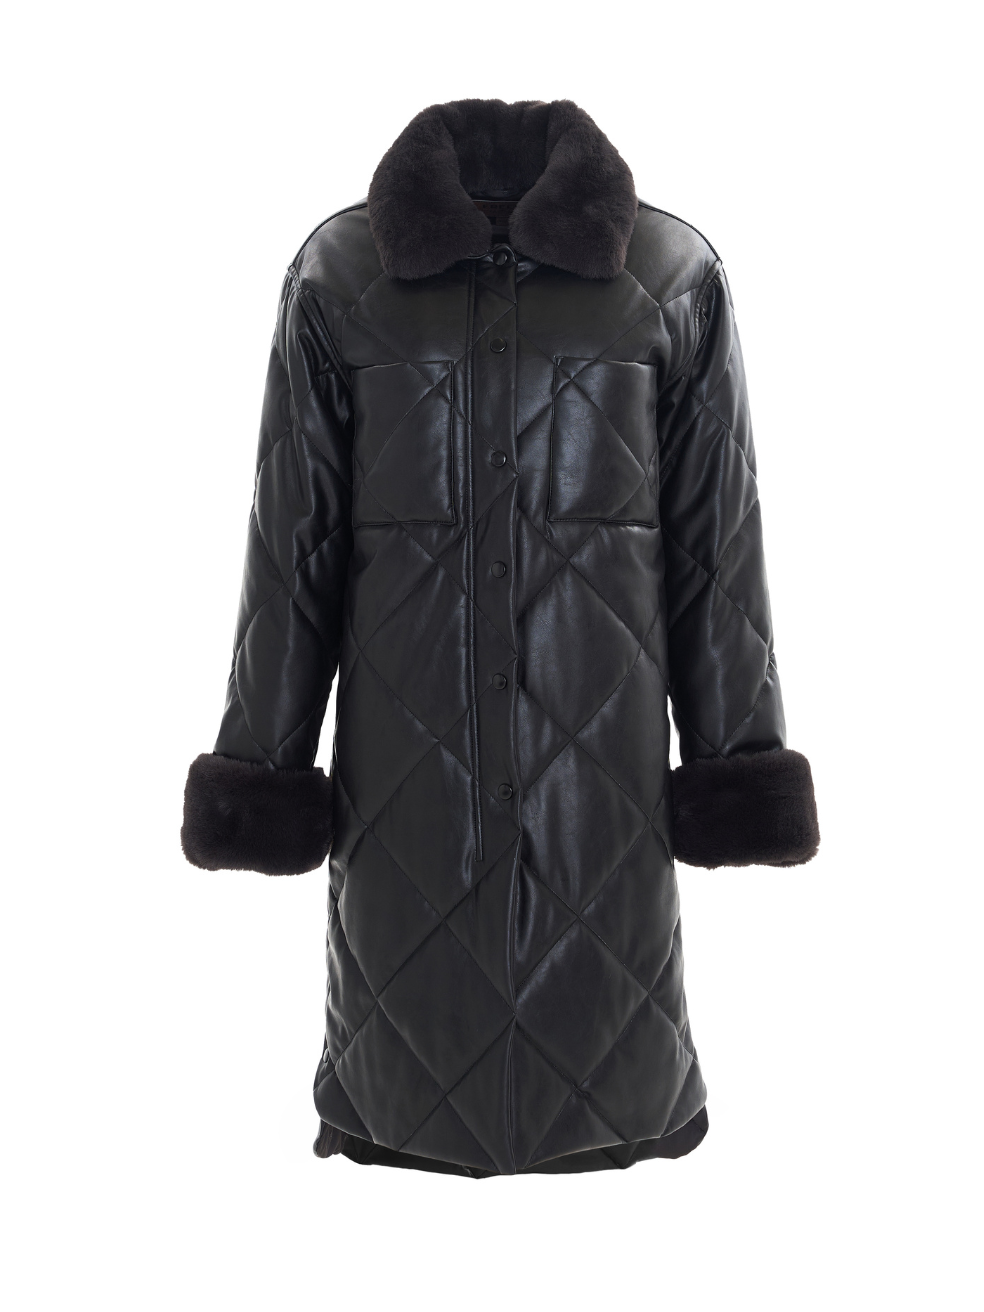 Kym Stormi Matte Black Slow Fashion Luxury Coat Animal Free Leather Fur Cold Weather